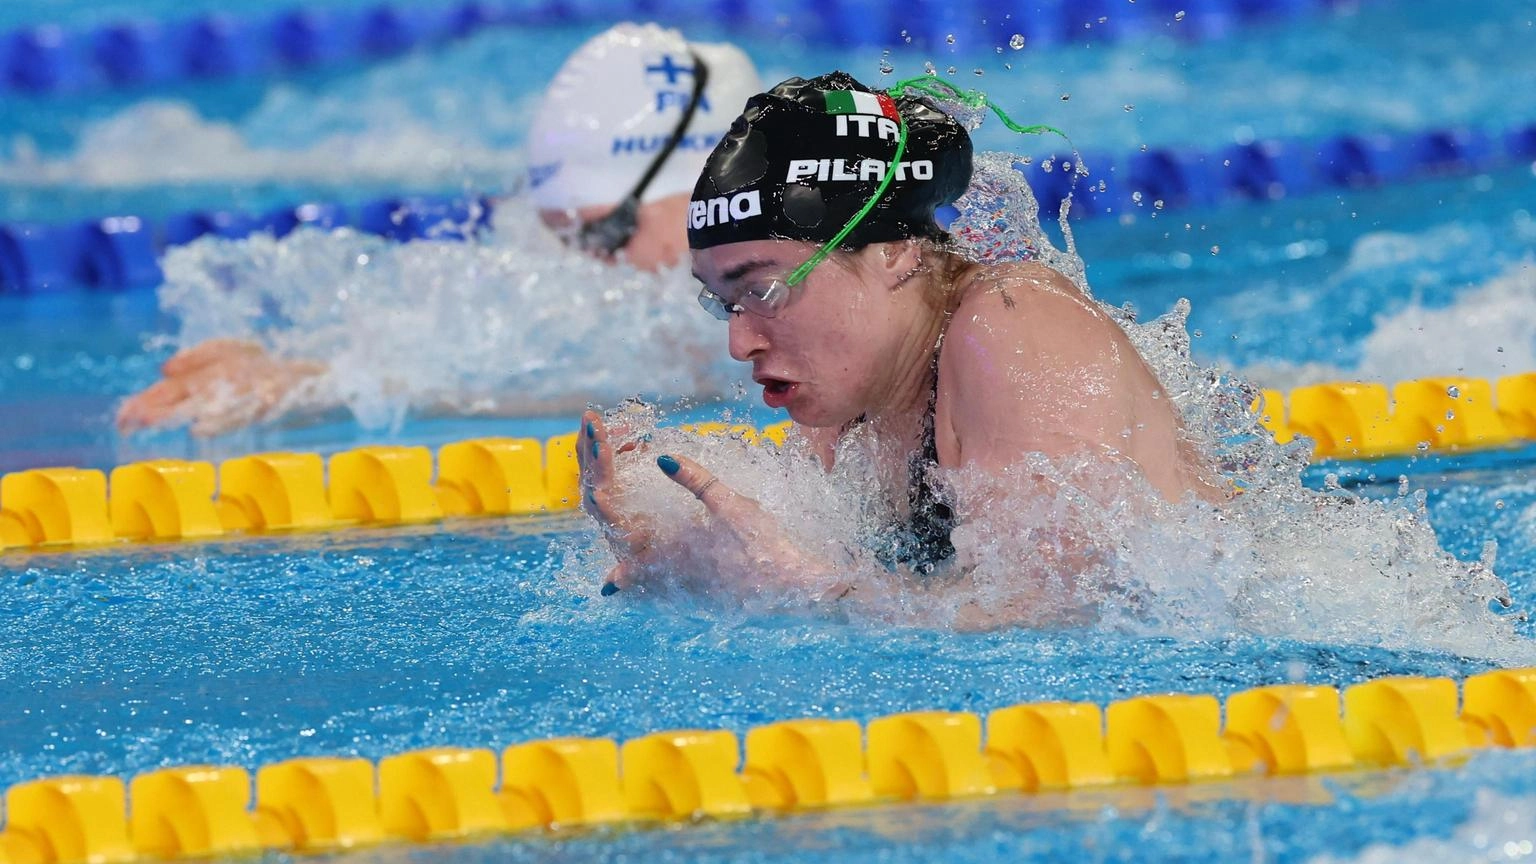 Mondiali nuoto: Pilato bronzo nei 50 rana